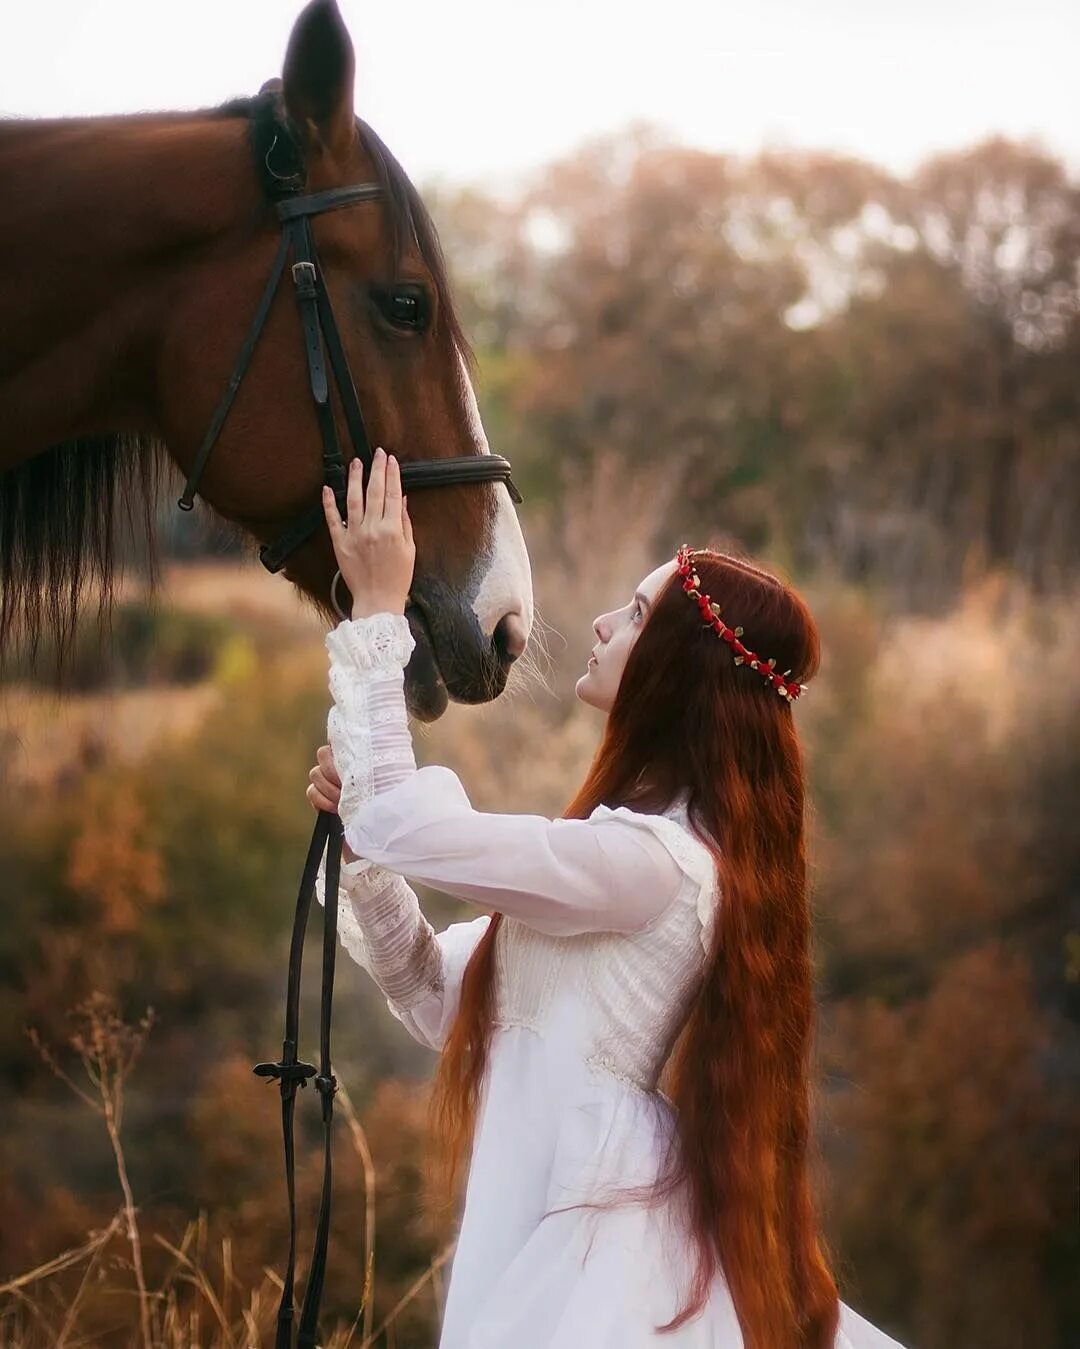 Девки и лошади. Фотосессия с лошадьми. Девушка с лошадью. Красивая фотосессия с лошадью. Девочка на лошади.